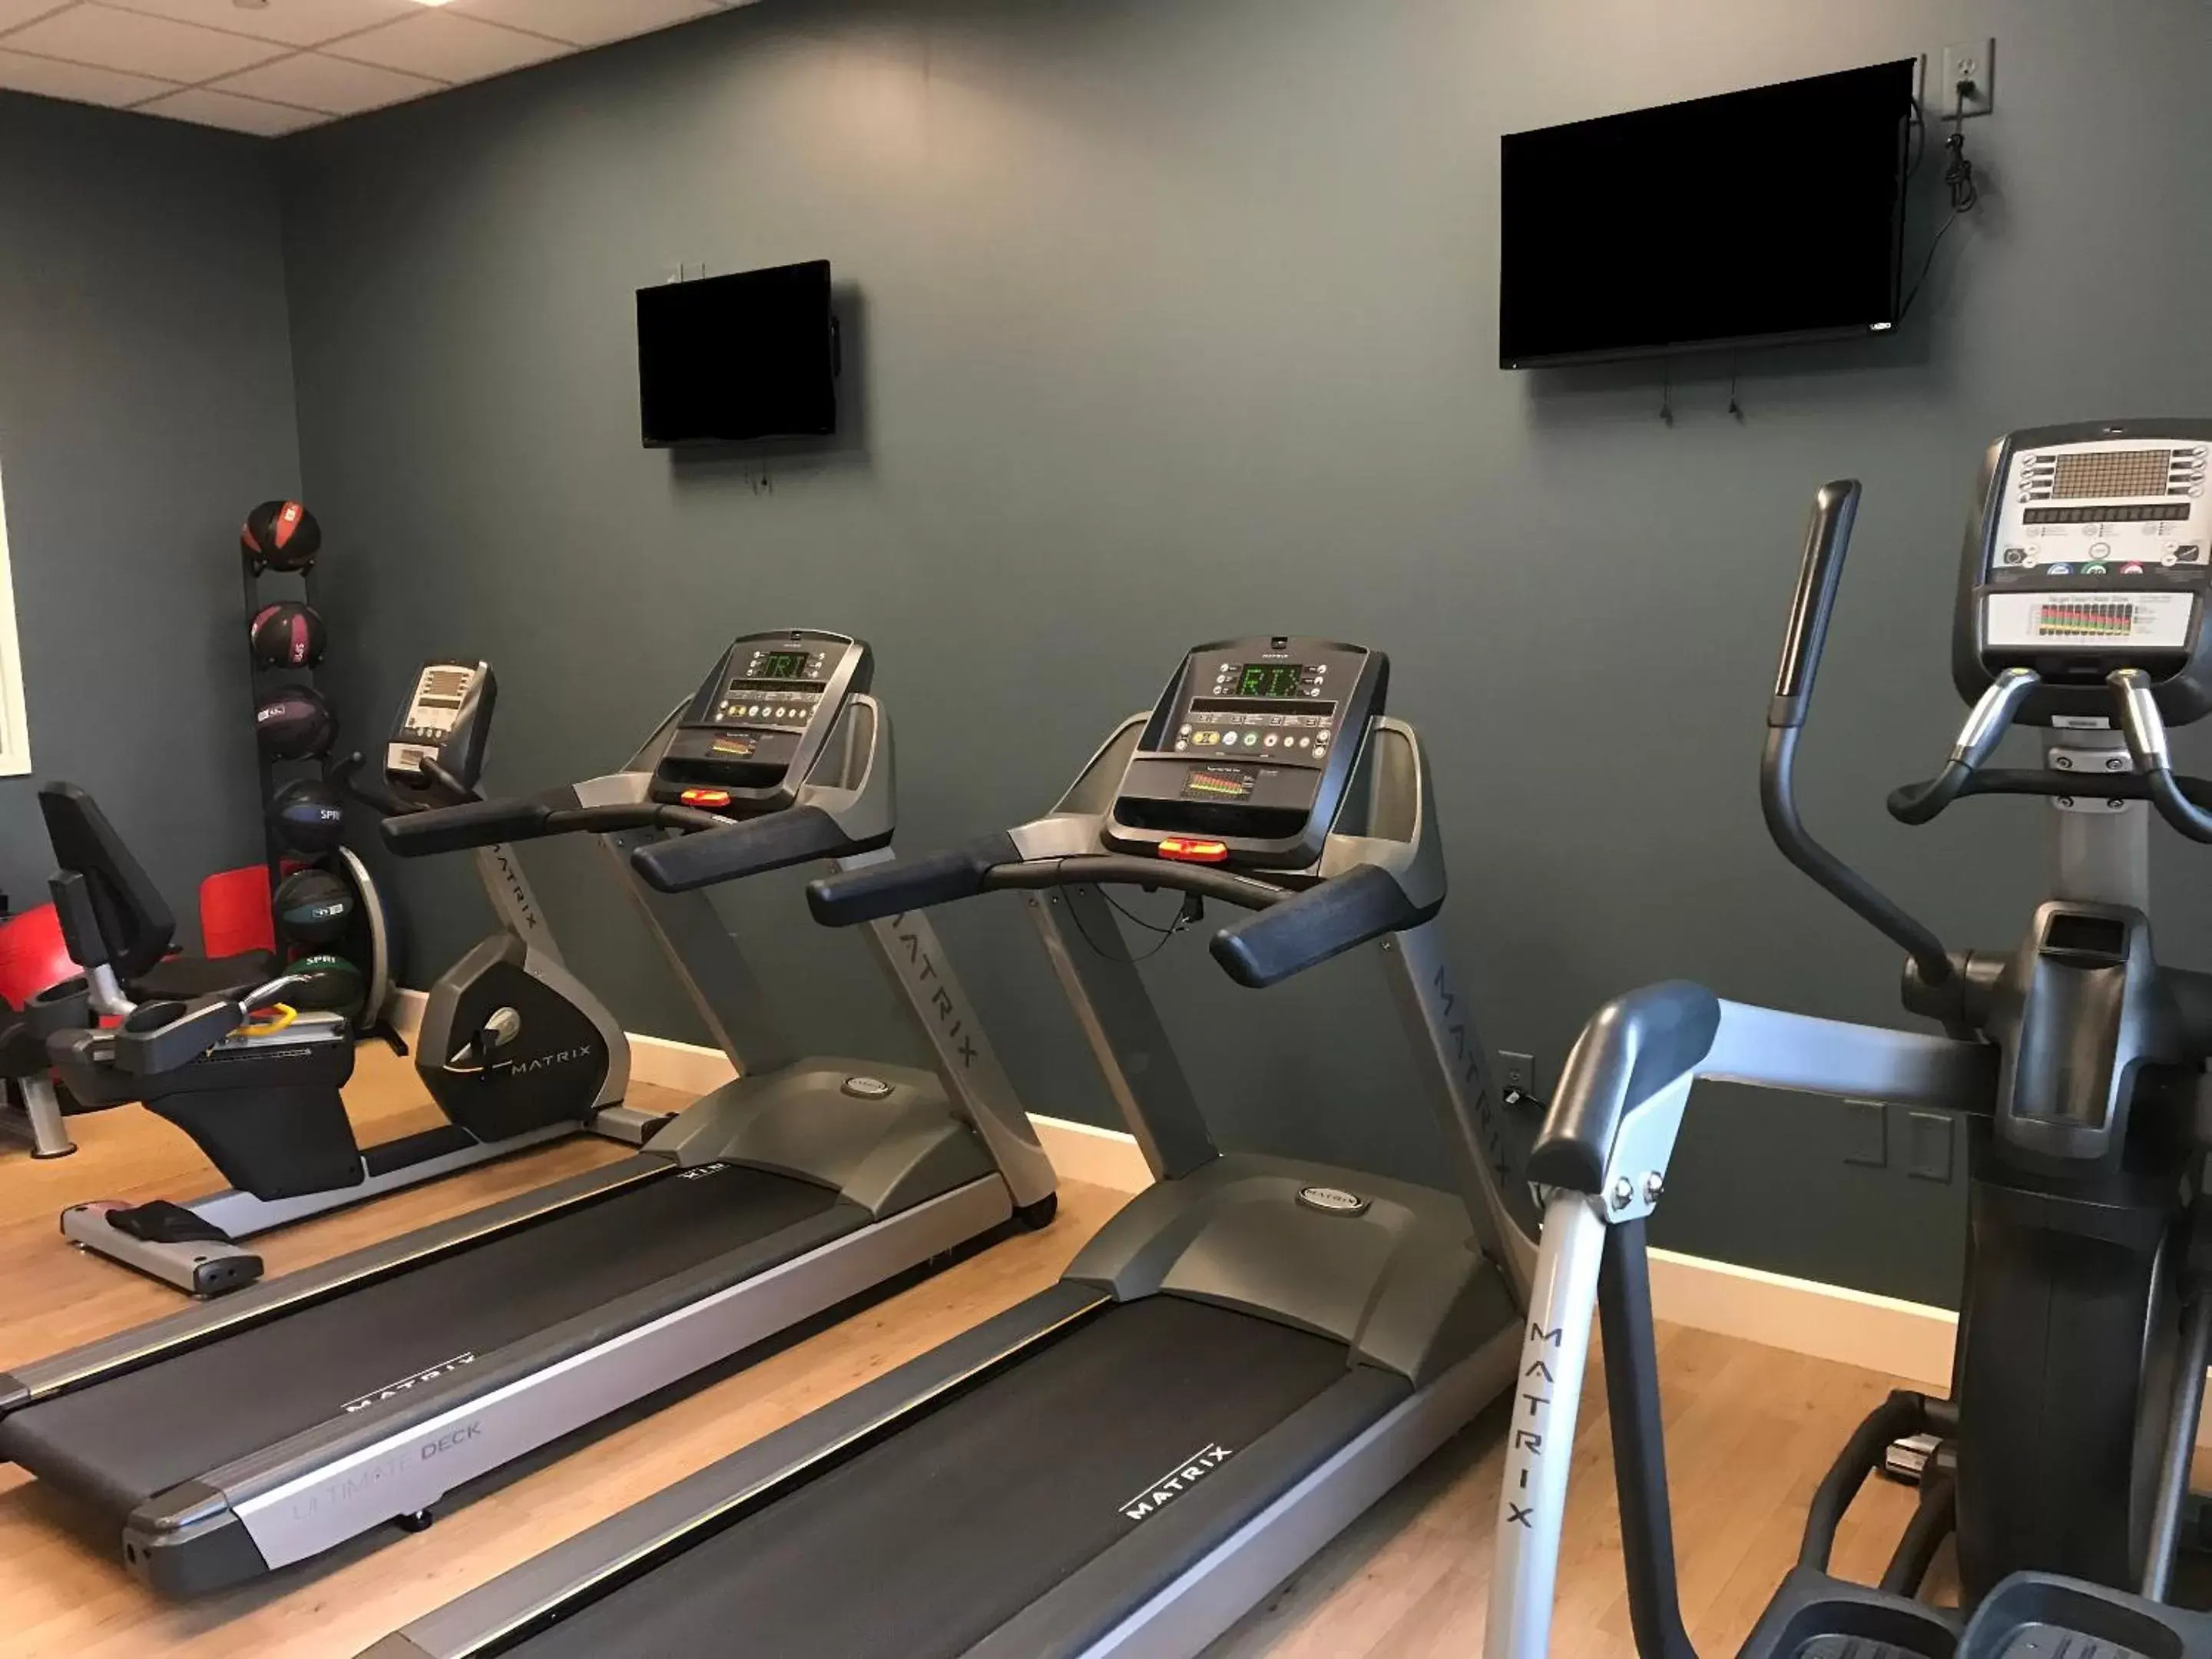 Fitness centre/facilities, Fitness Center/Facilities in Village Hotel on Biltmore Estate